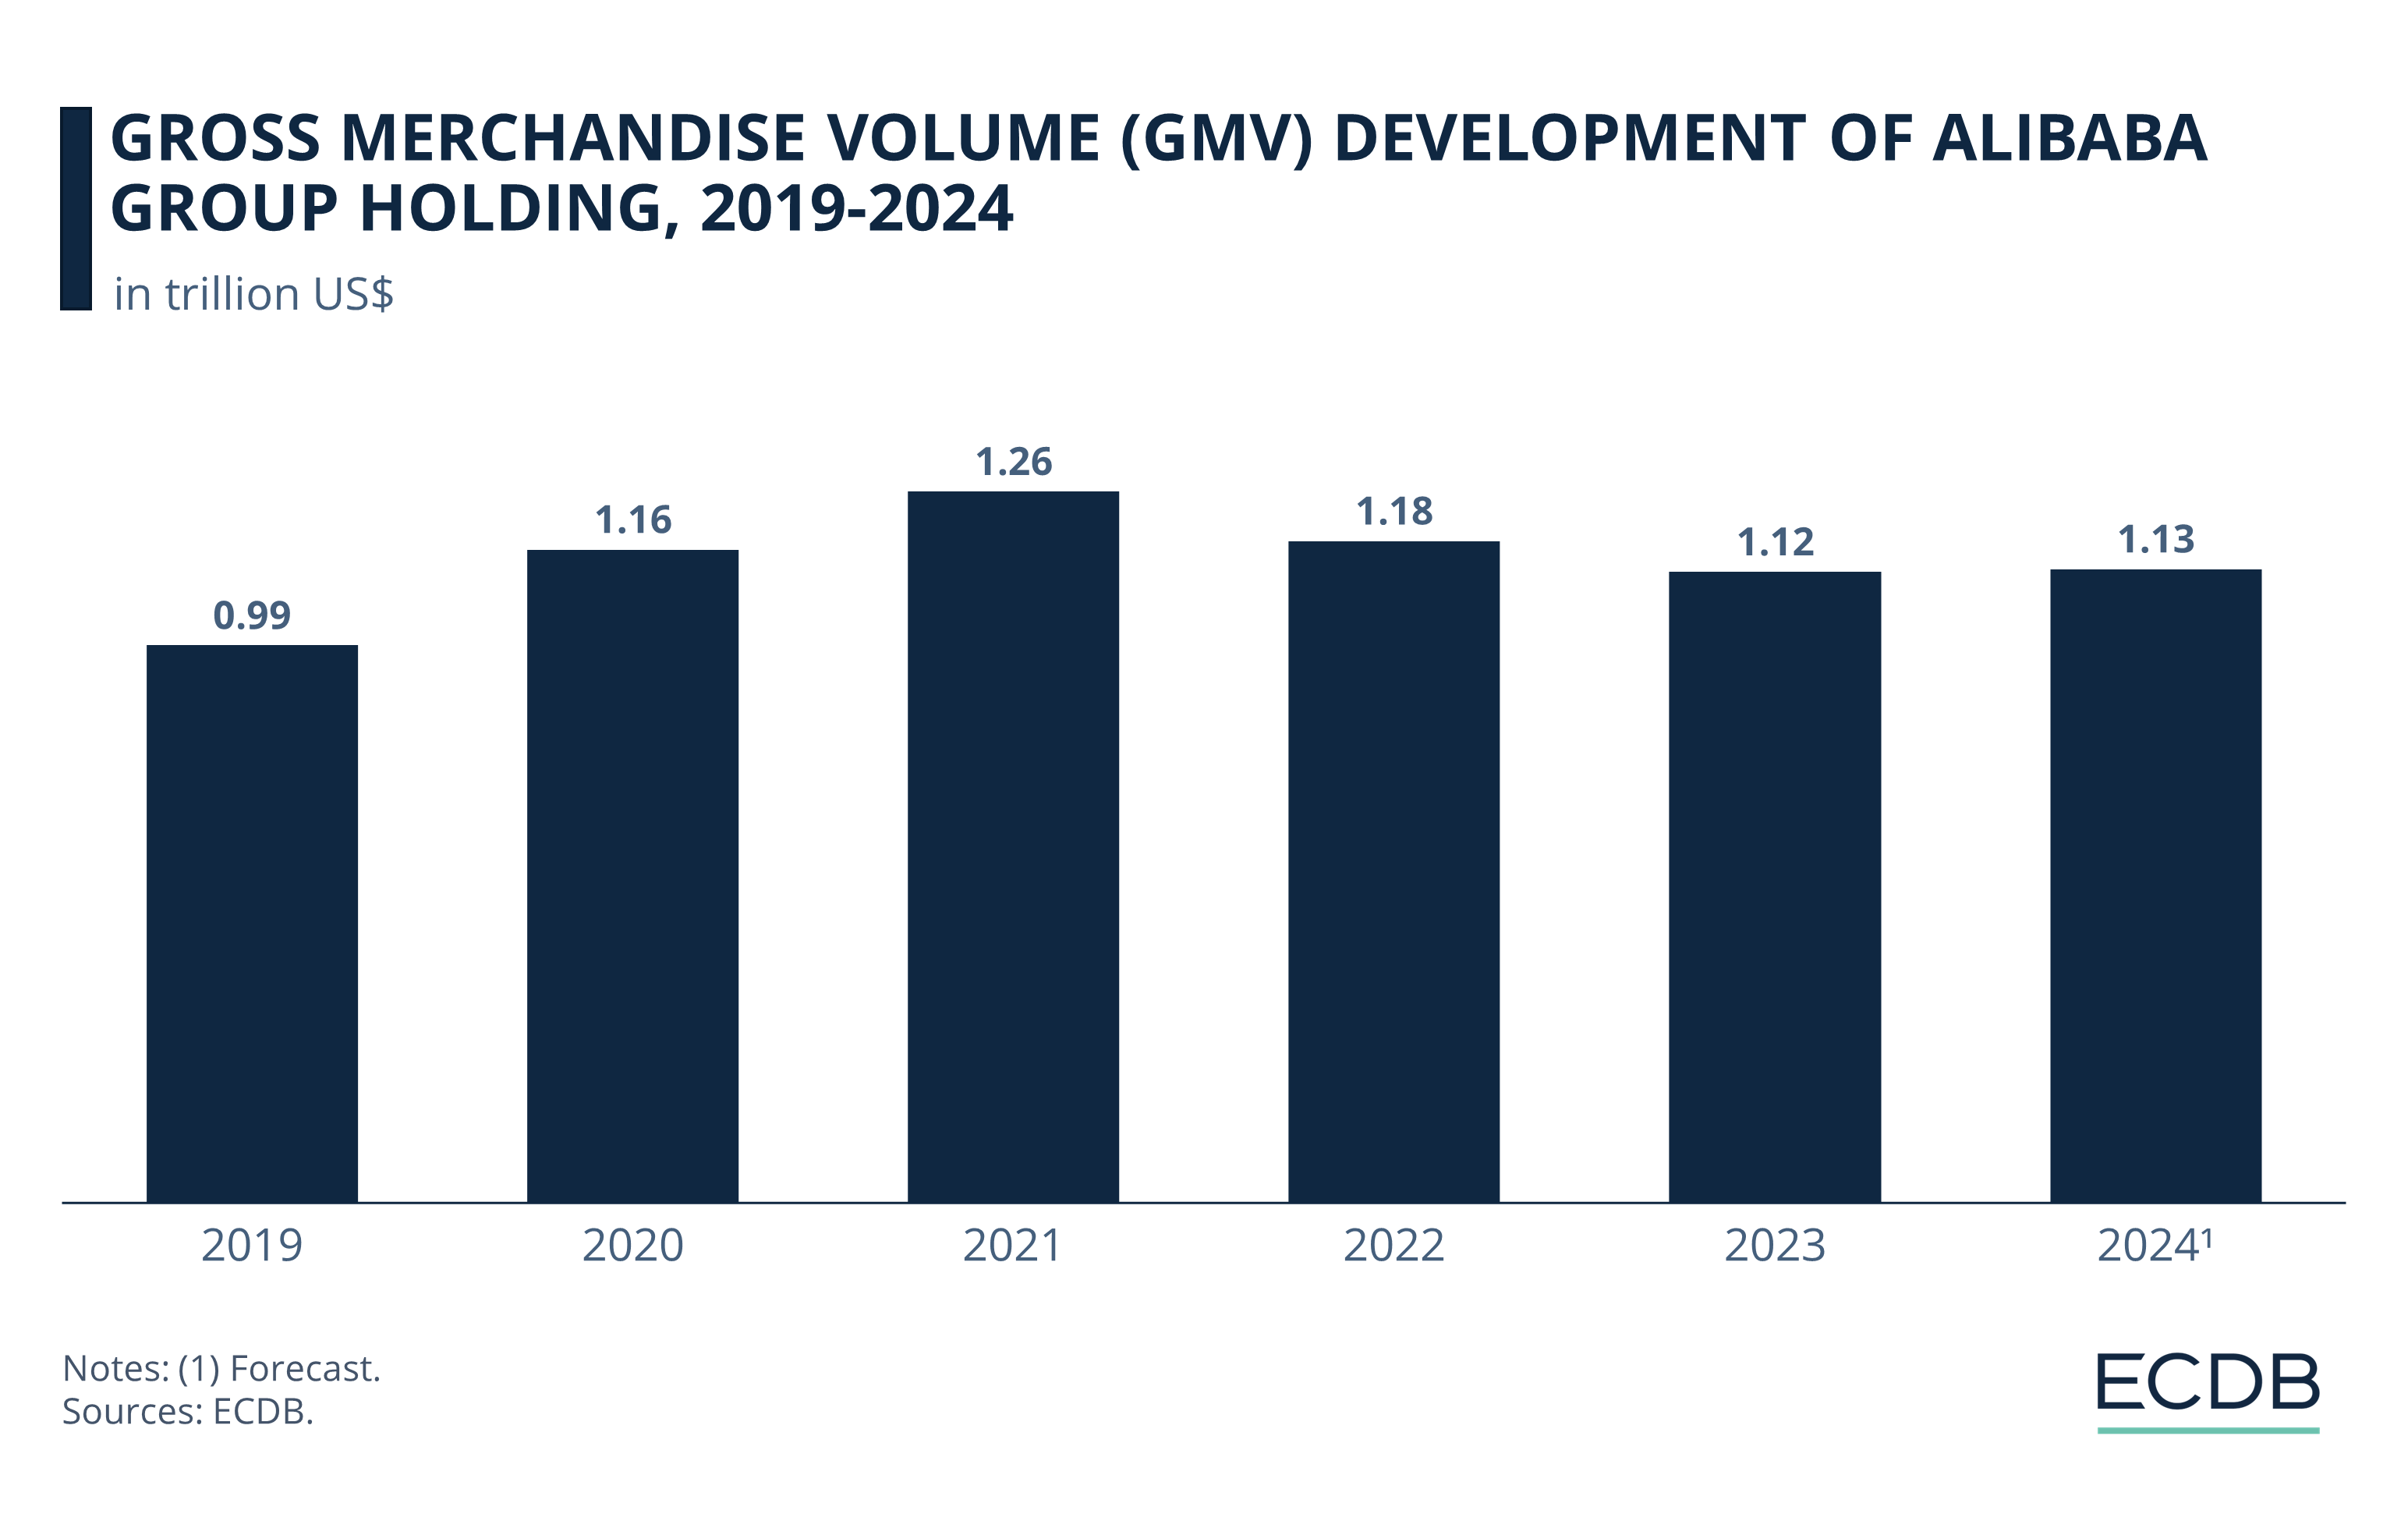 GMV Development of Alibaba Group Holding, 2019-2024